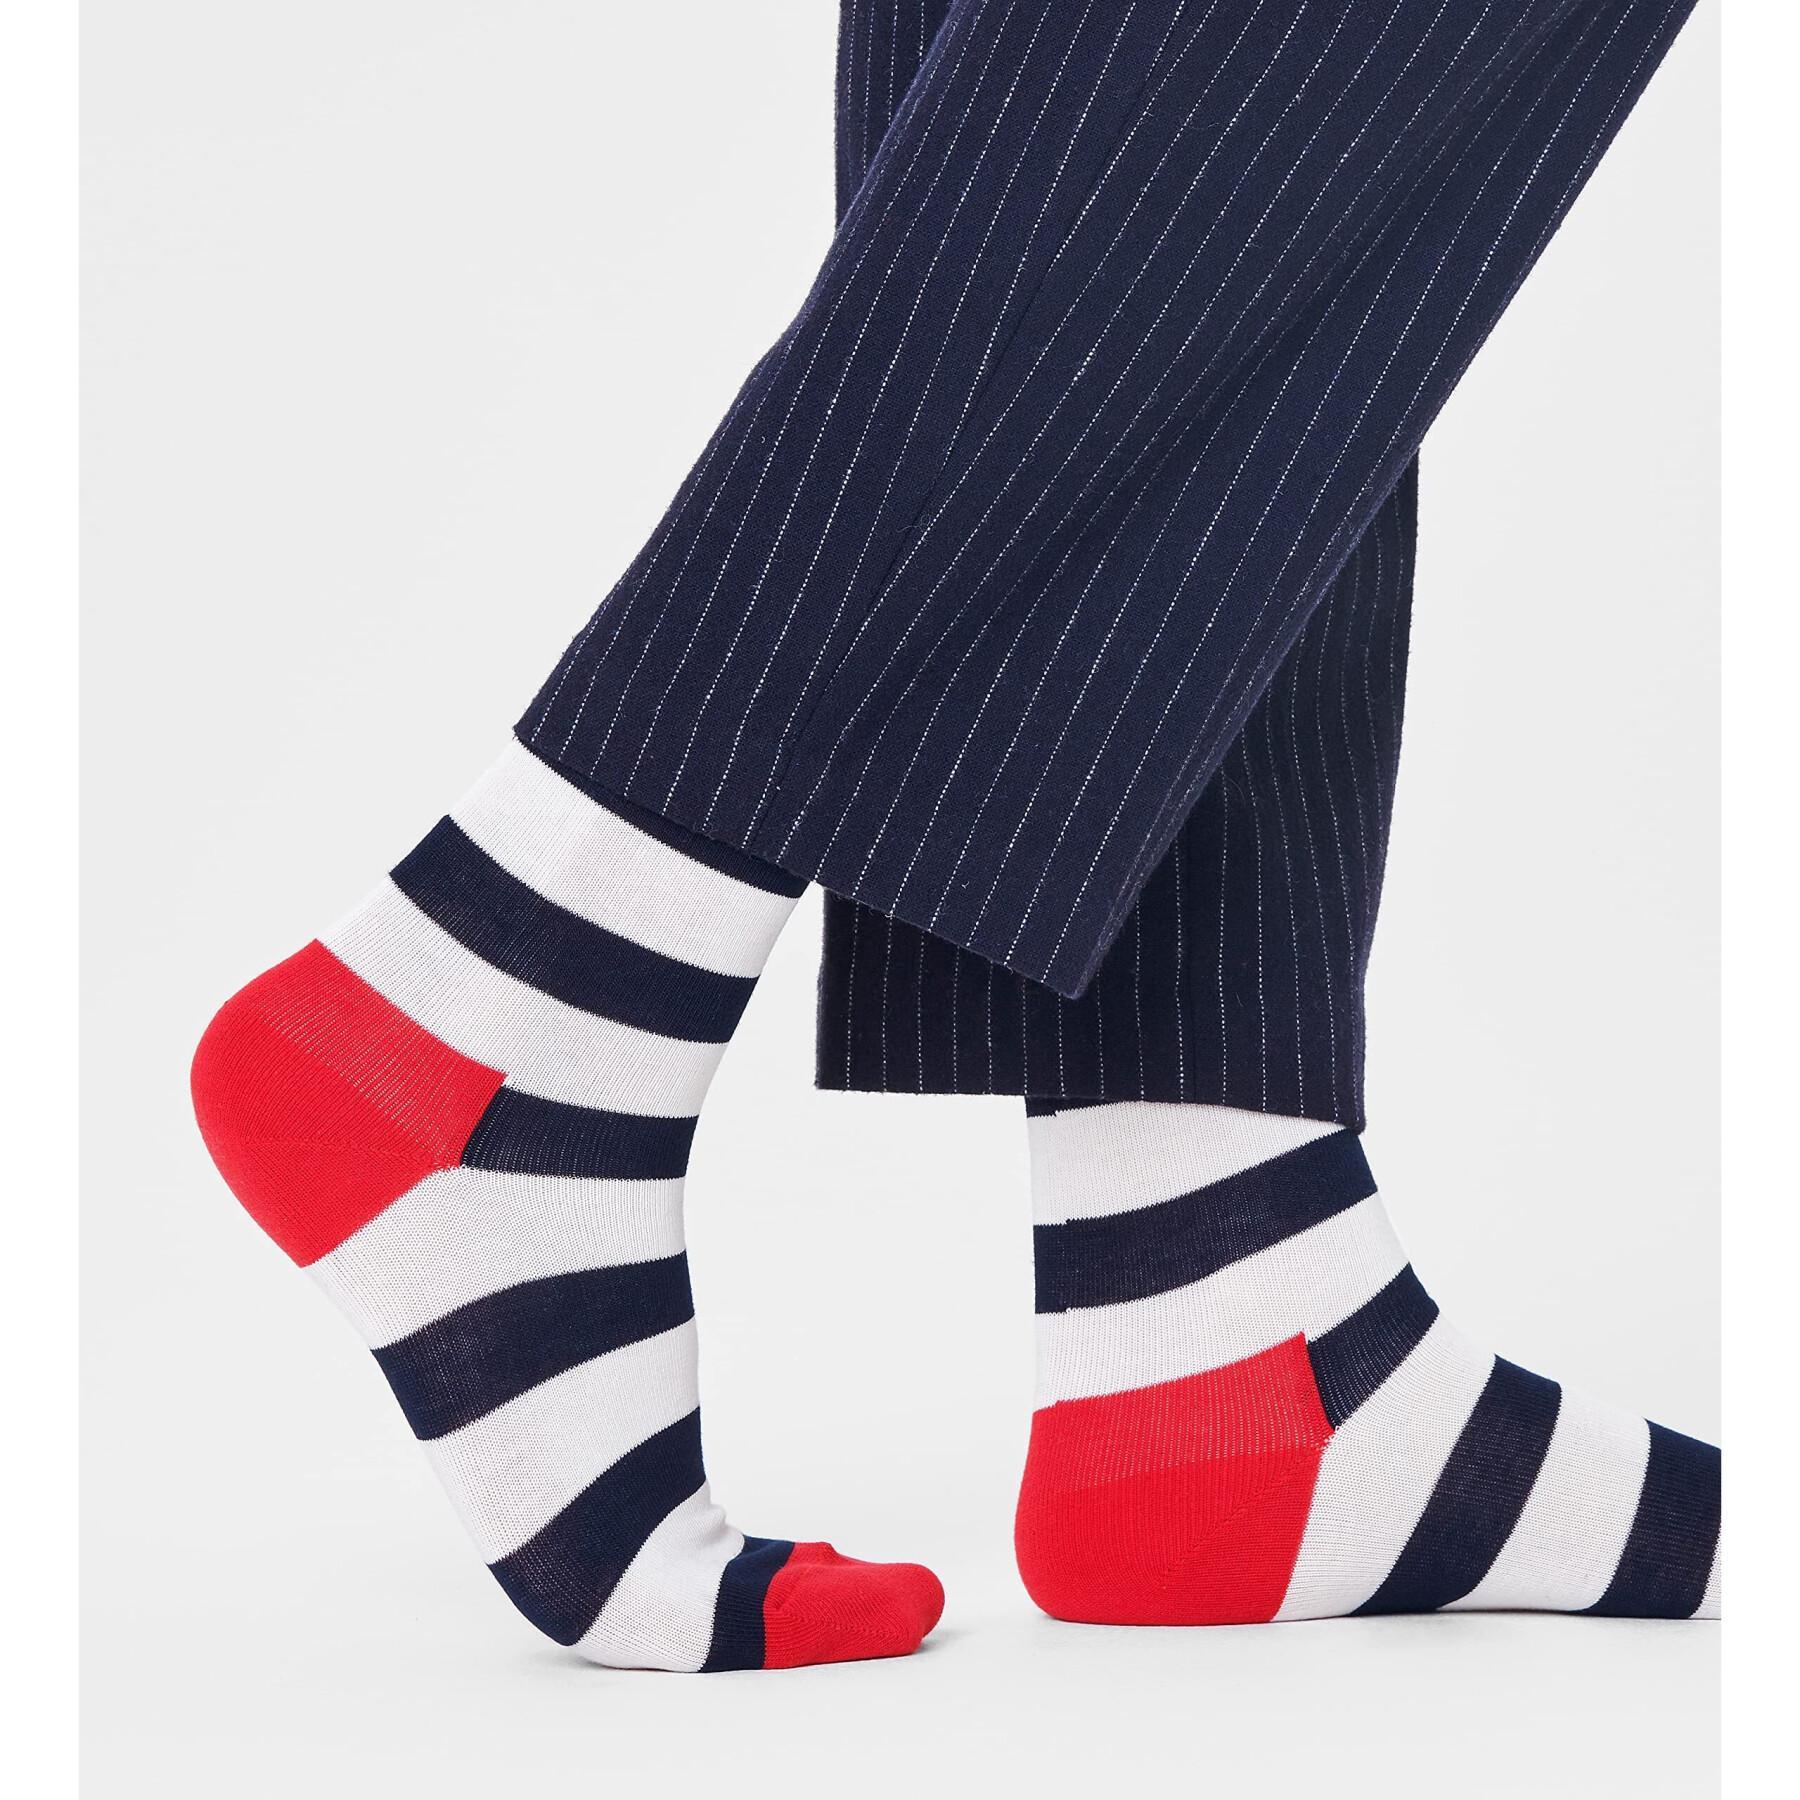 Set of 2 pairs of socks Happy Socks Classic Big Dots